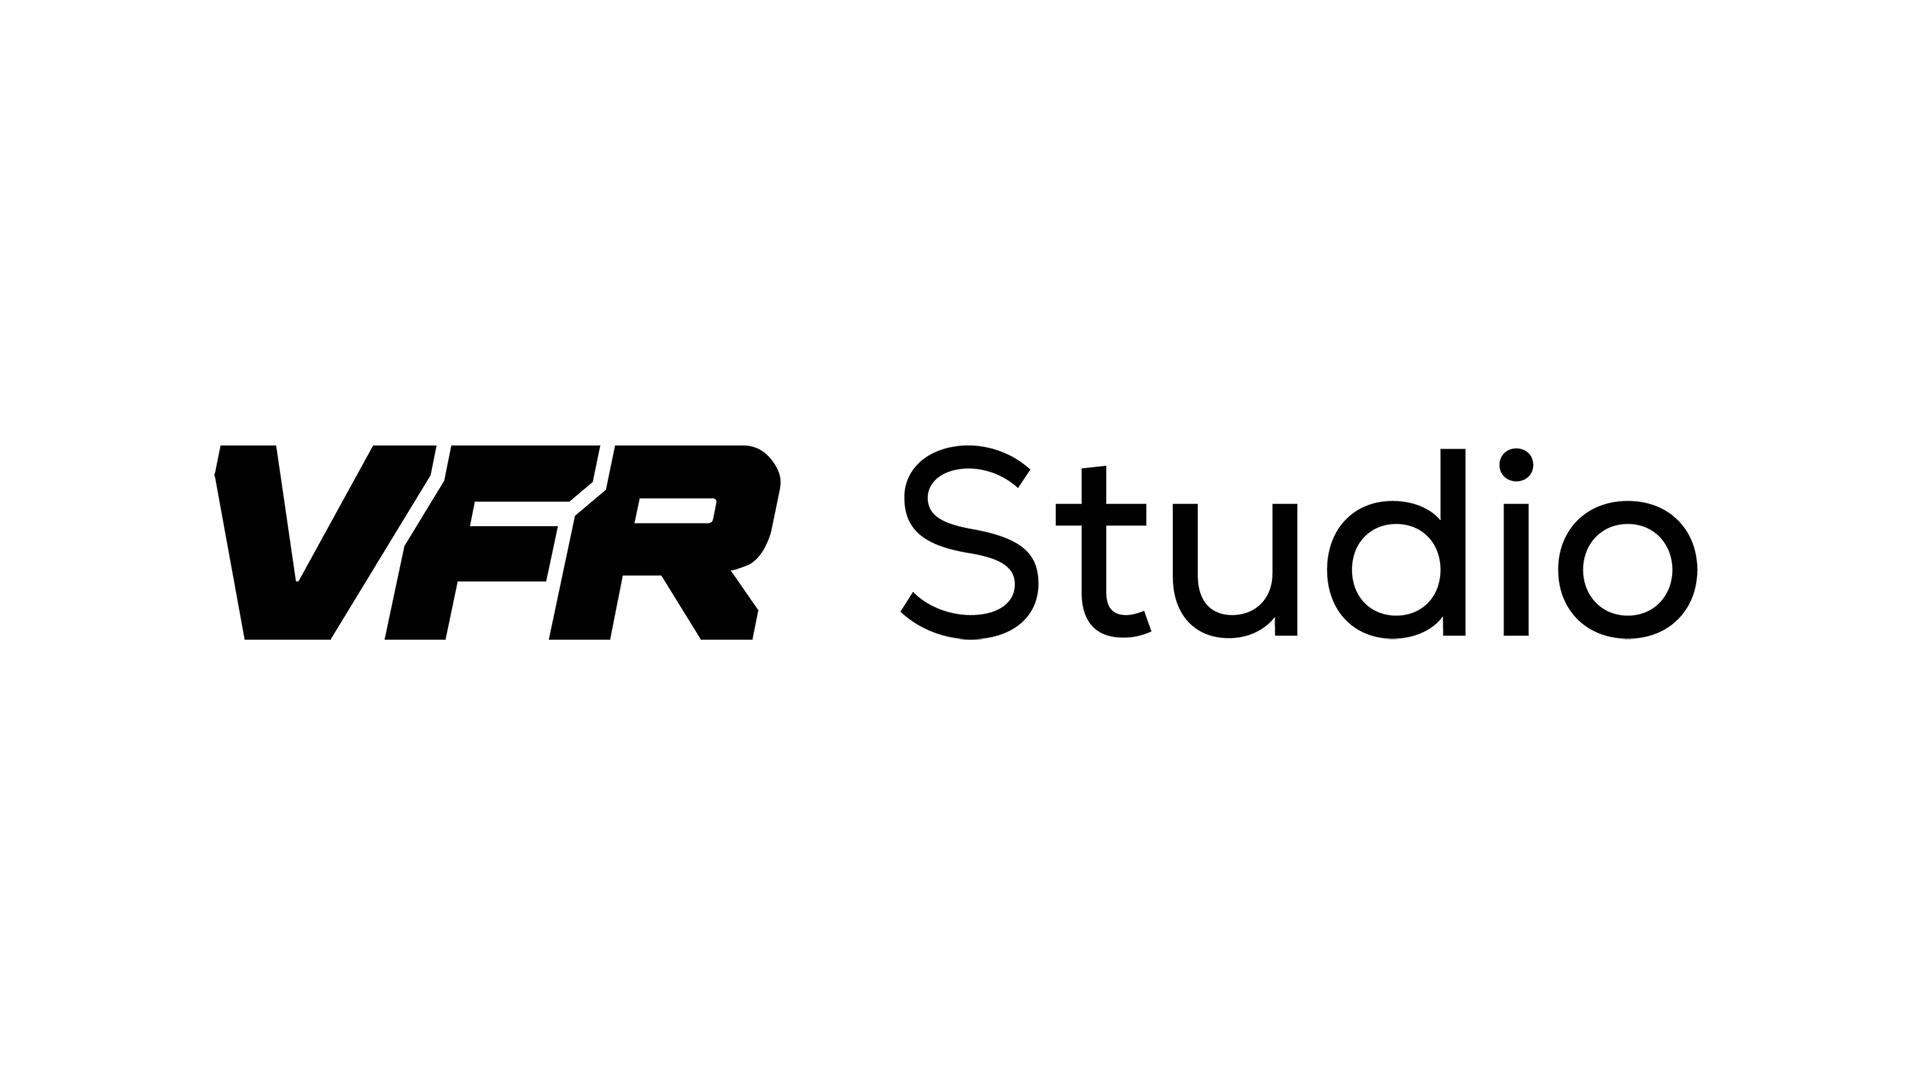 VFR Studio